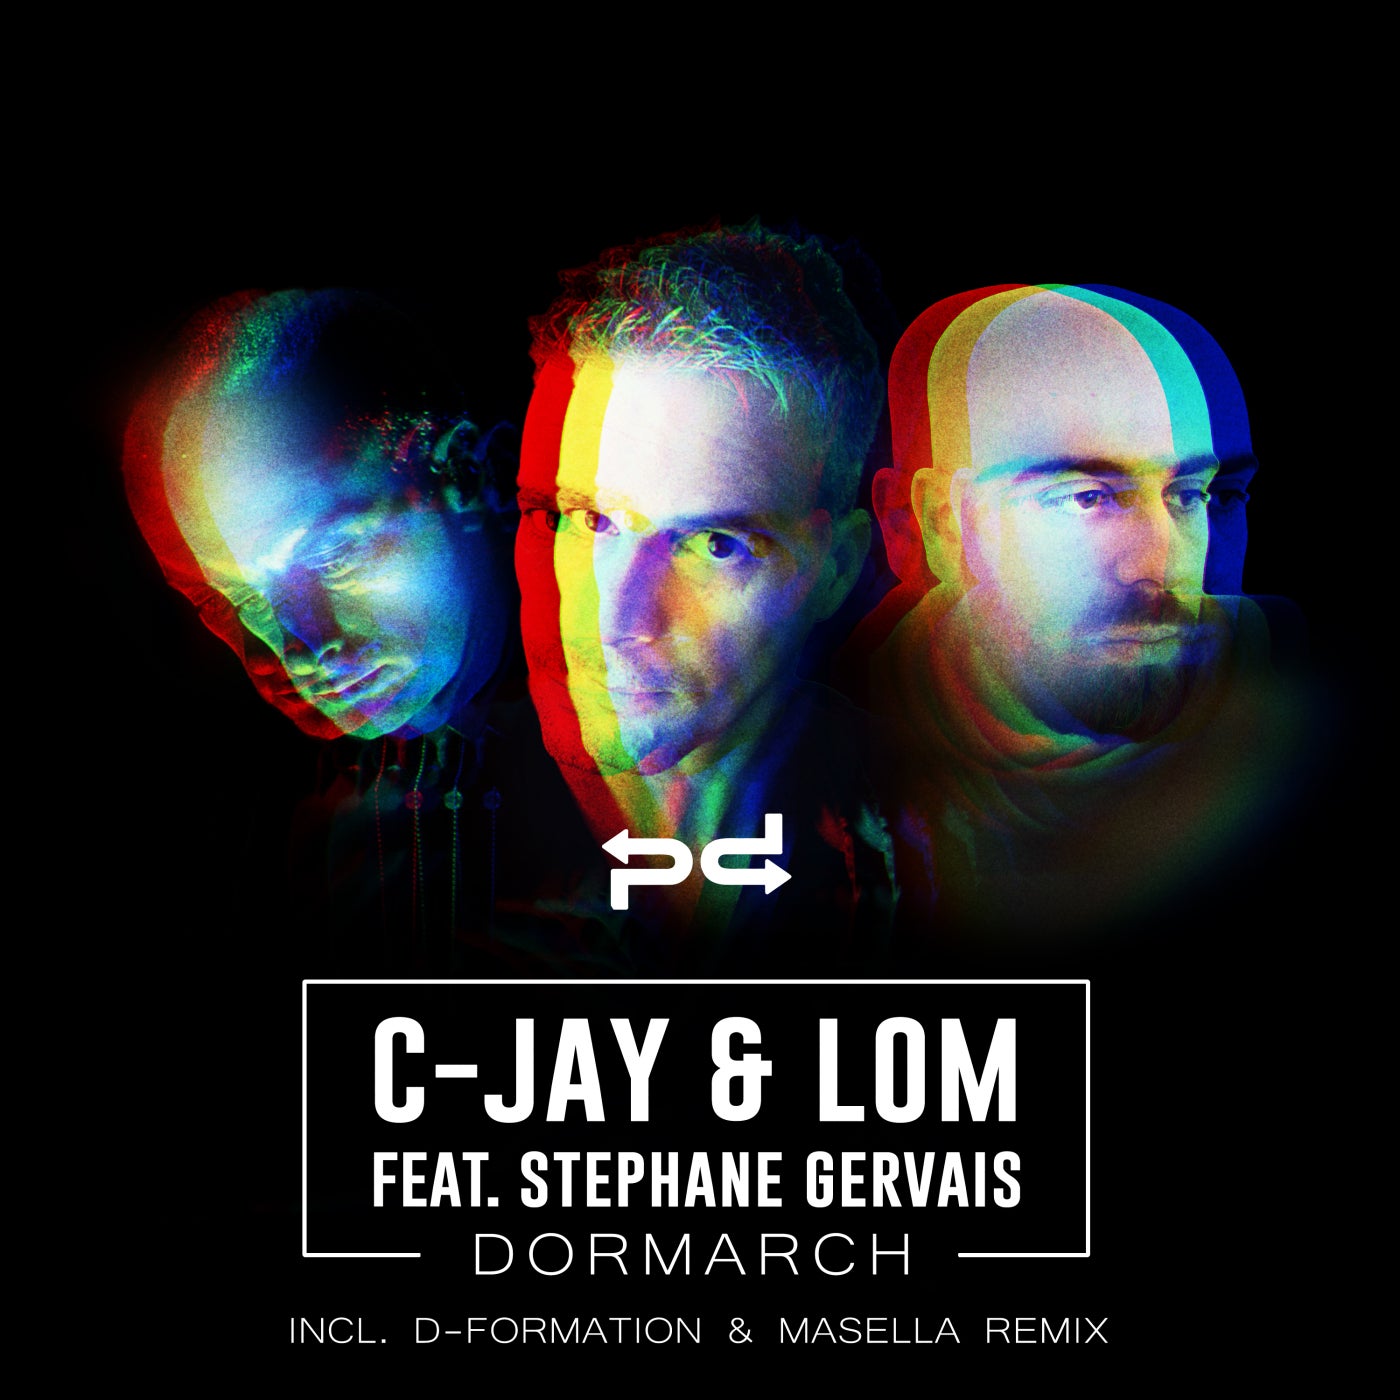 C-Jay & LOM (AR) feat. Stephane Gervais - Dormarch (Original Mix)